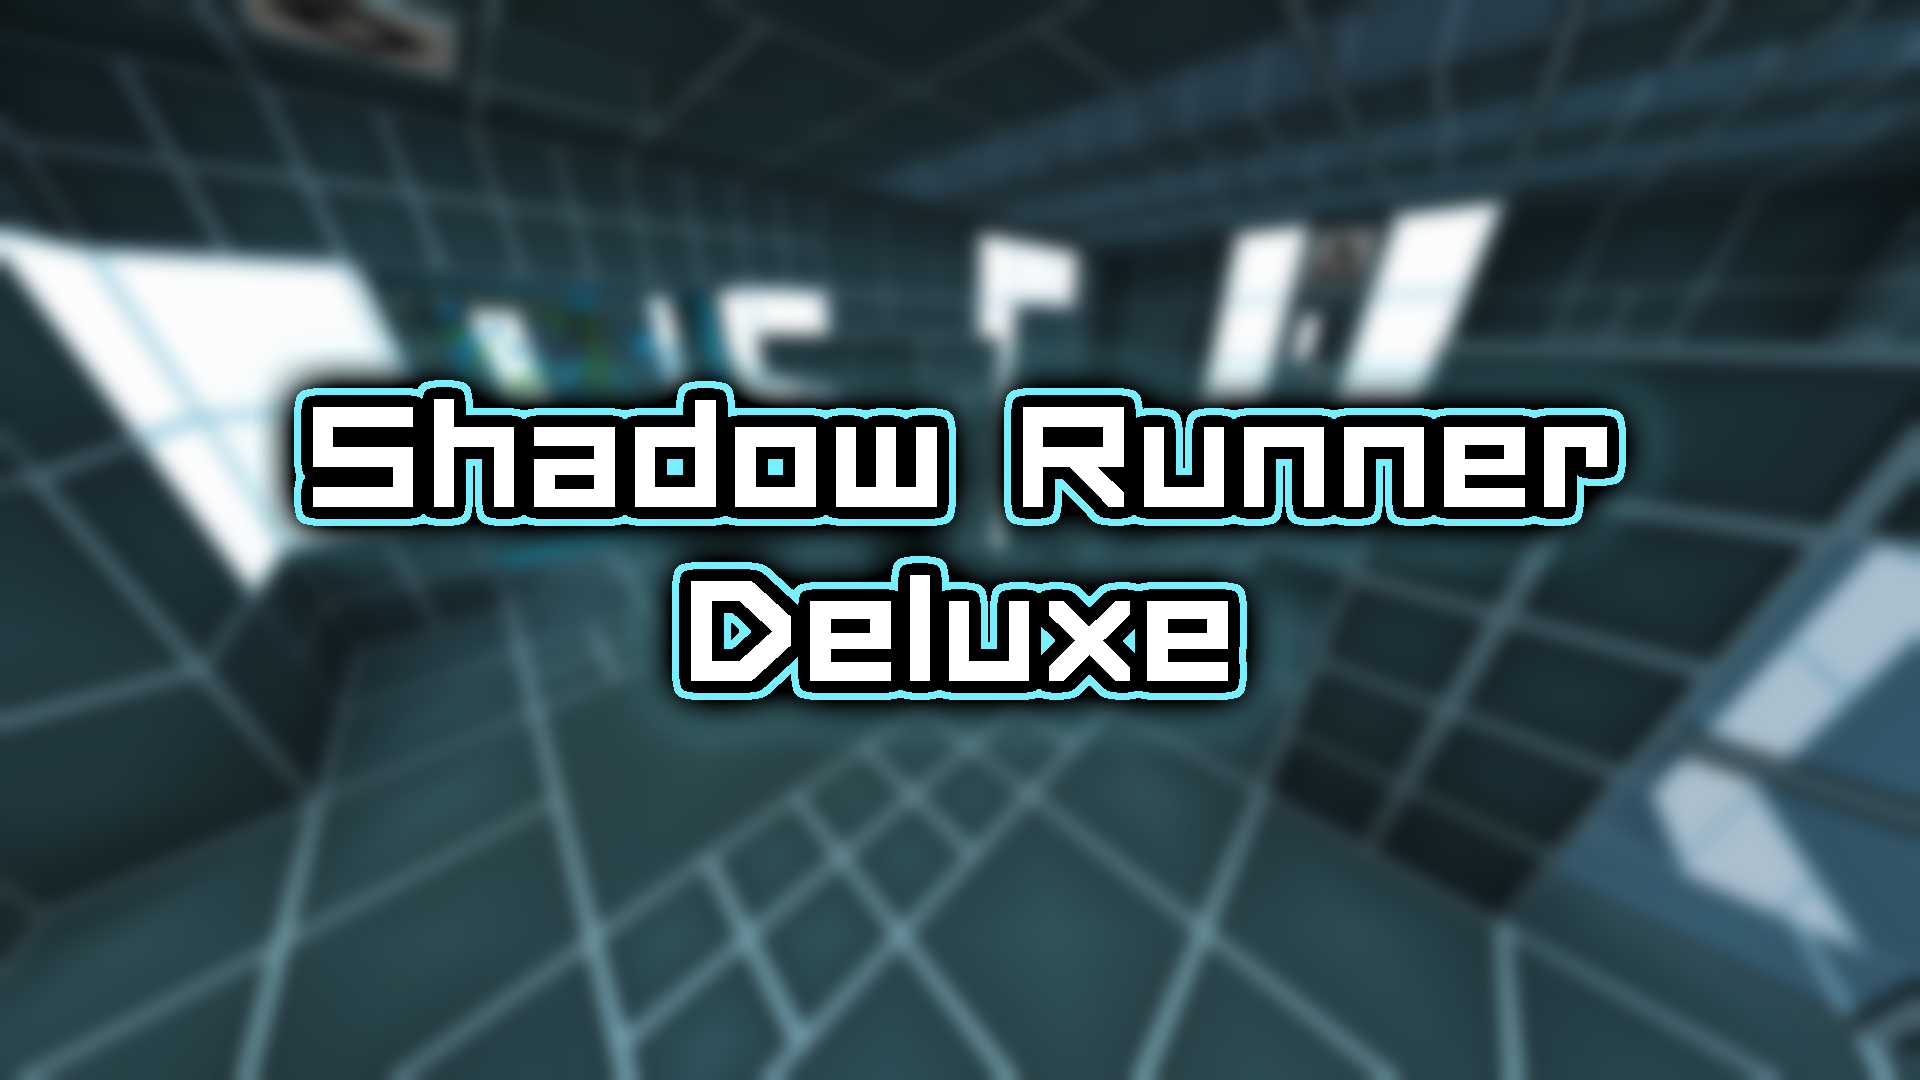 Descarca Shadow Runner Deluxe pentru Minecraft 1.14.4